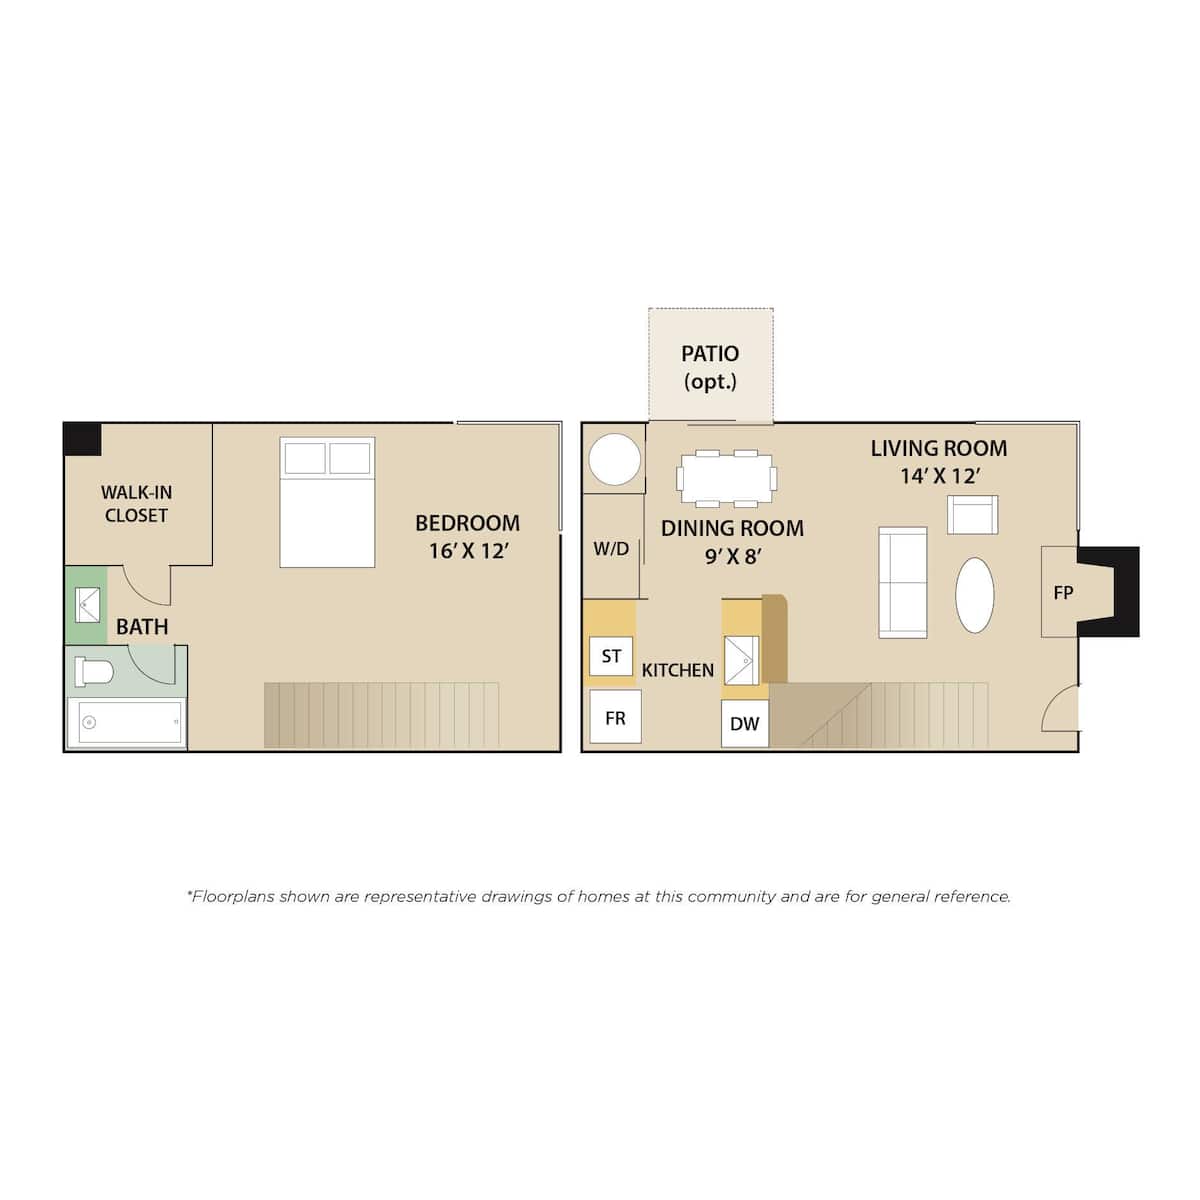 Floorplan diagram for The Hampton Town, showing 1 bedroom